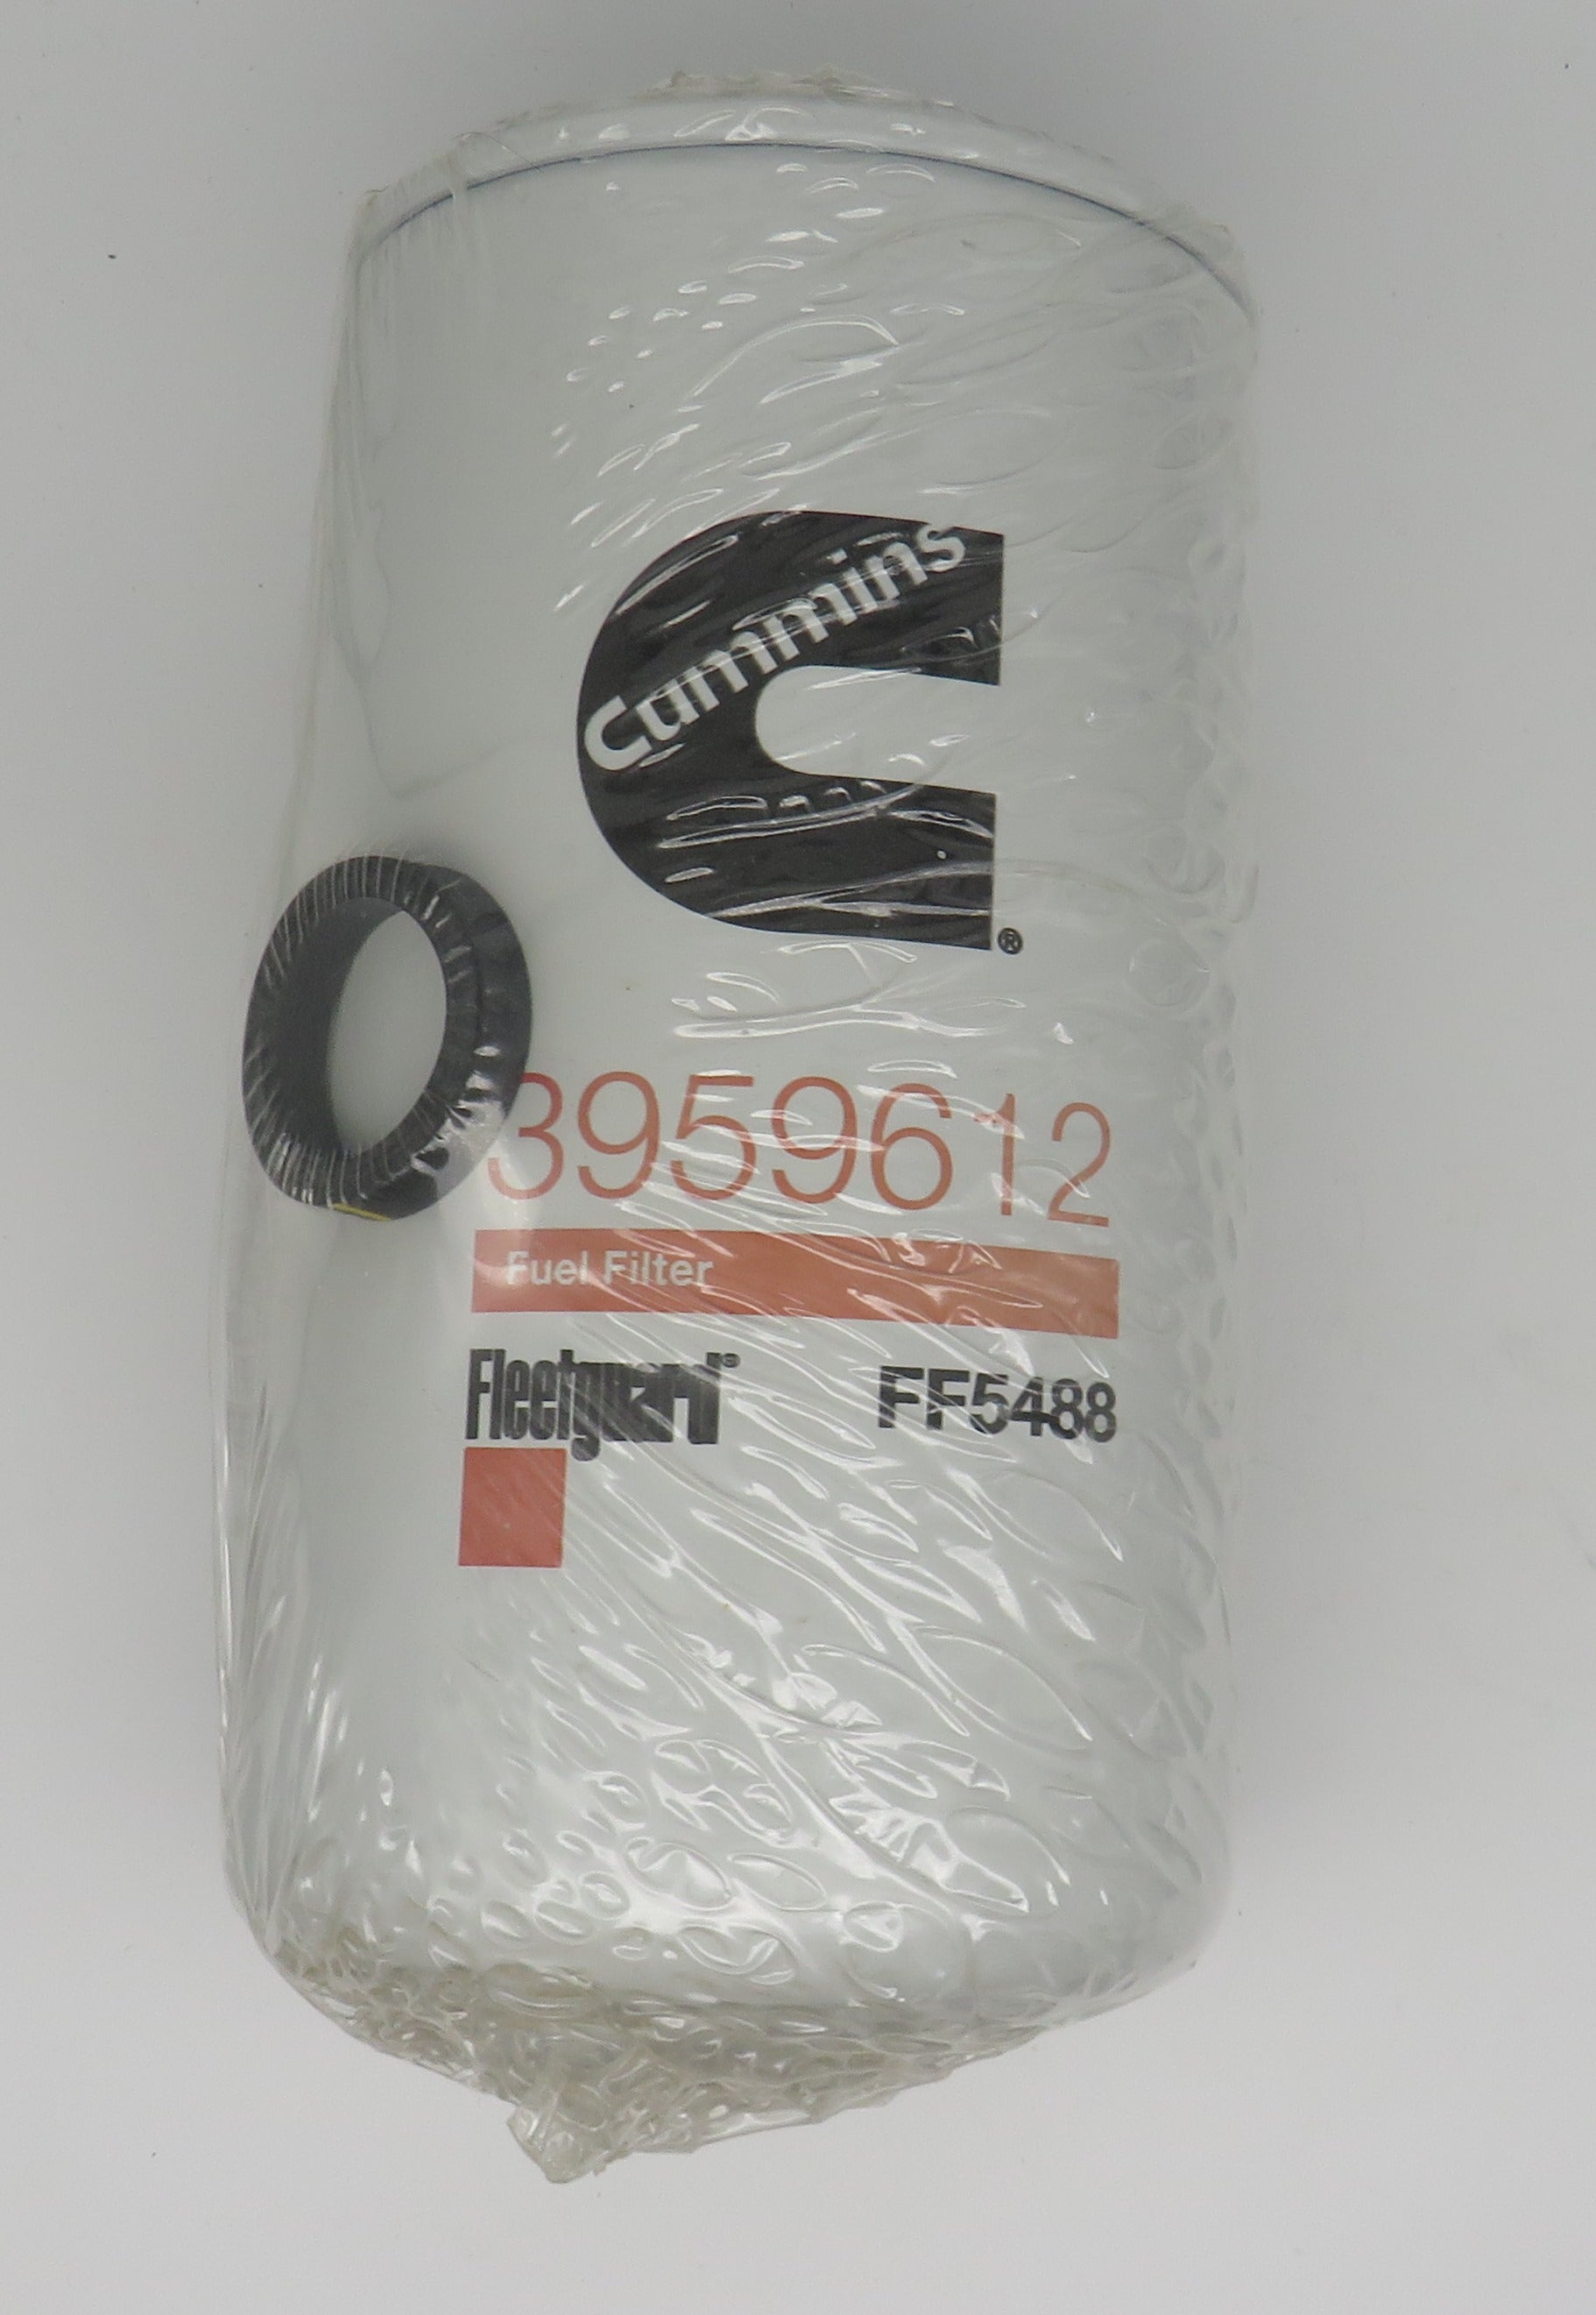 FF5488 Onan Cummins (Fleetguard) Fuel Filter 3959612 